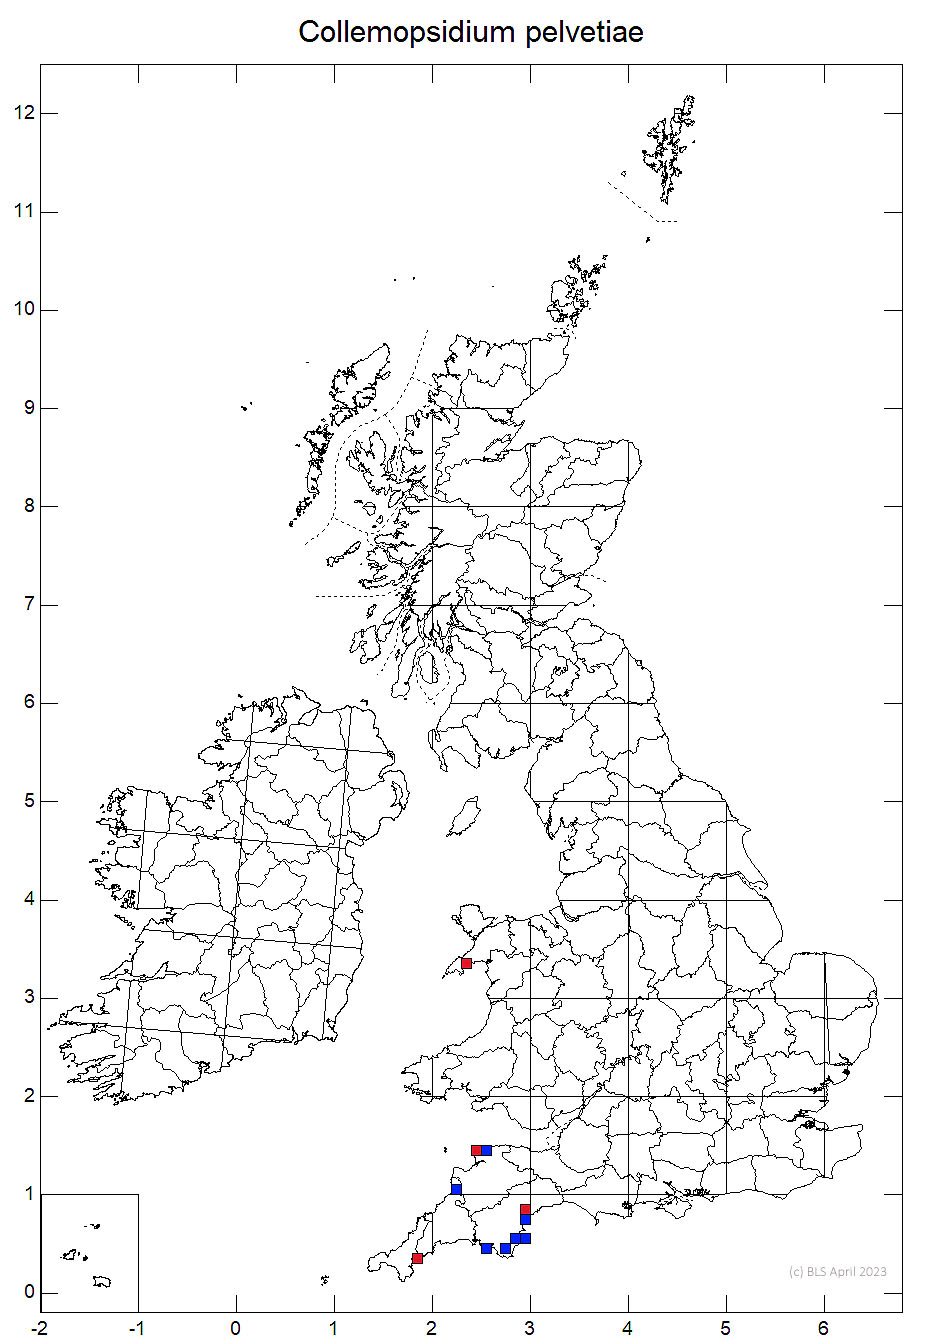 Collemopsidium pelvetiae 10km sq distribution map